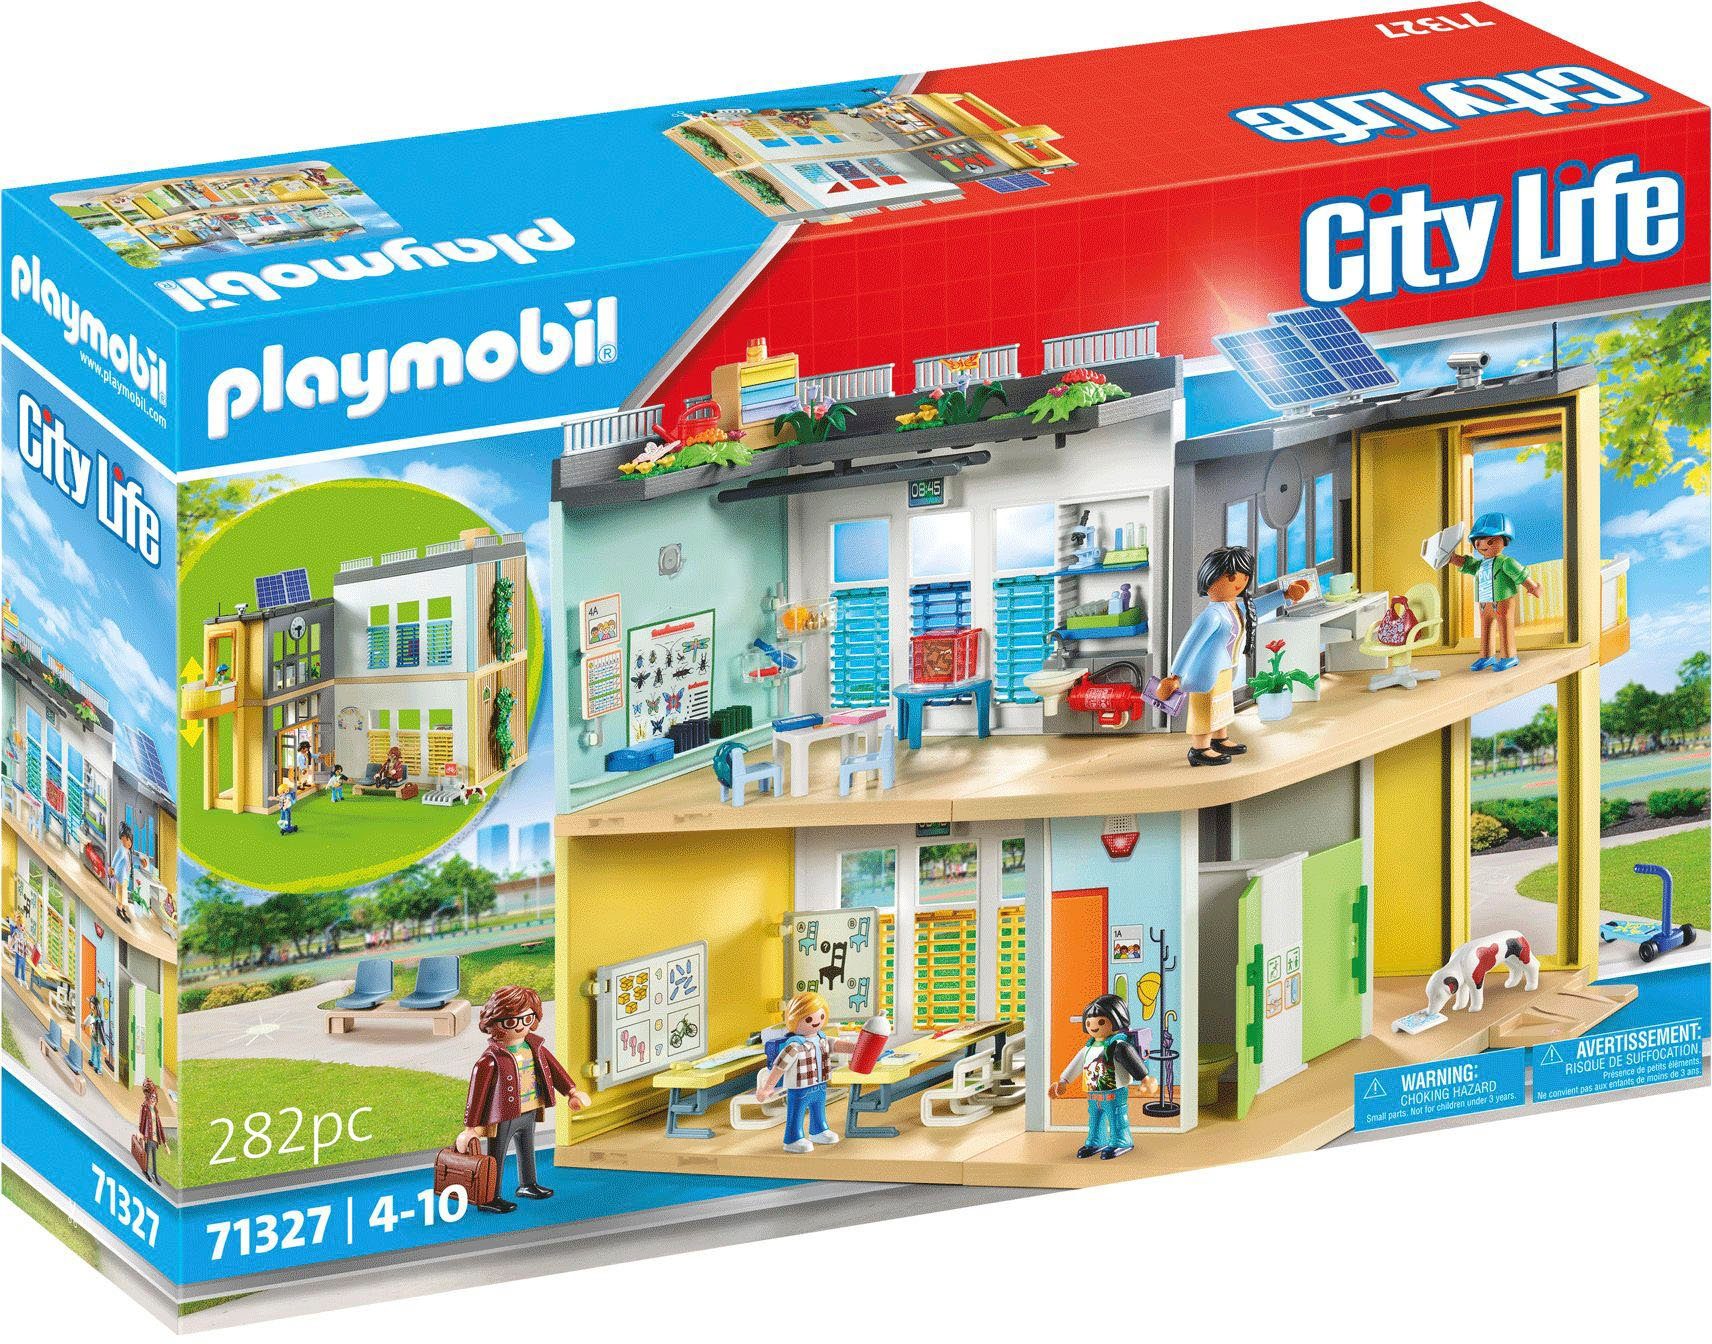 Playmobil® Konstruktions-Spielset Große Schule (71327), City Life, (282  St), Made in Germany